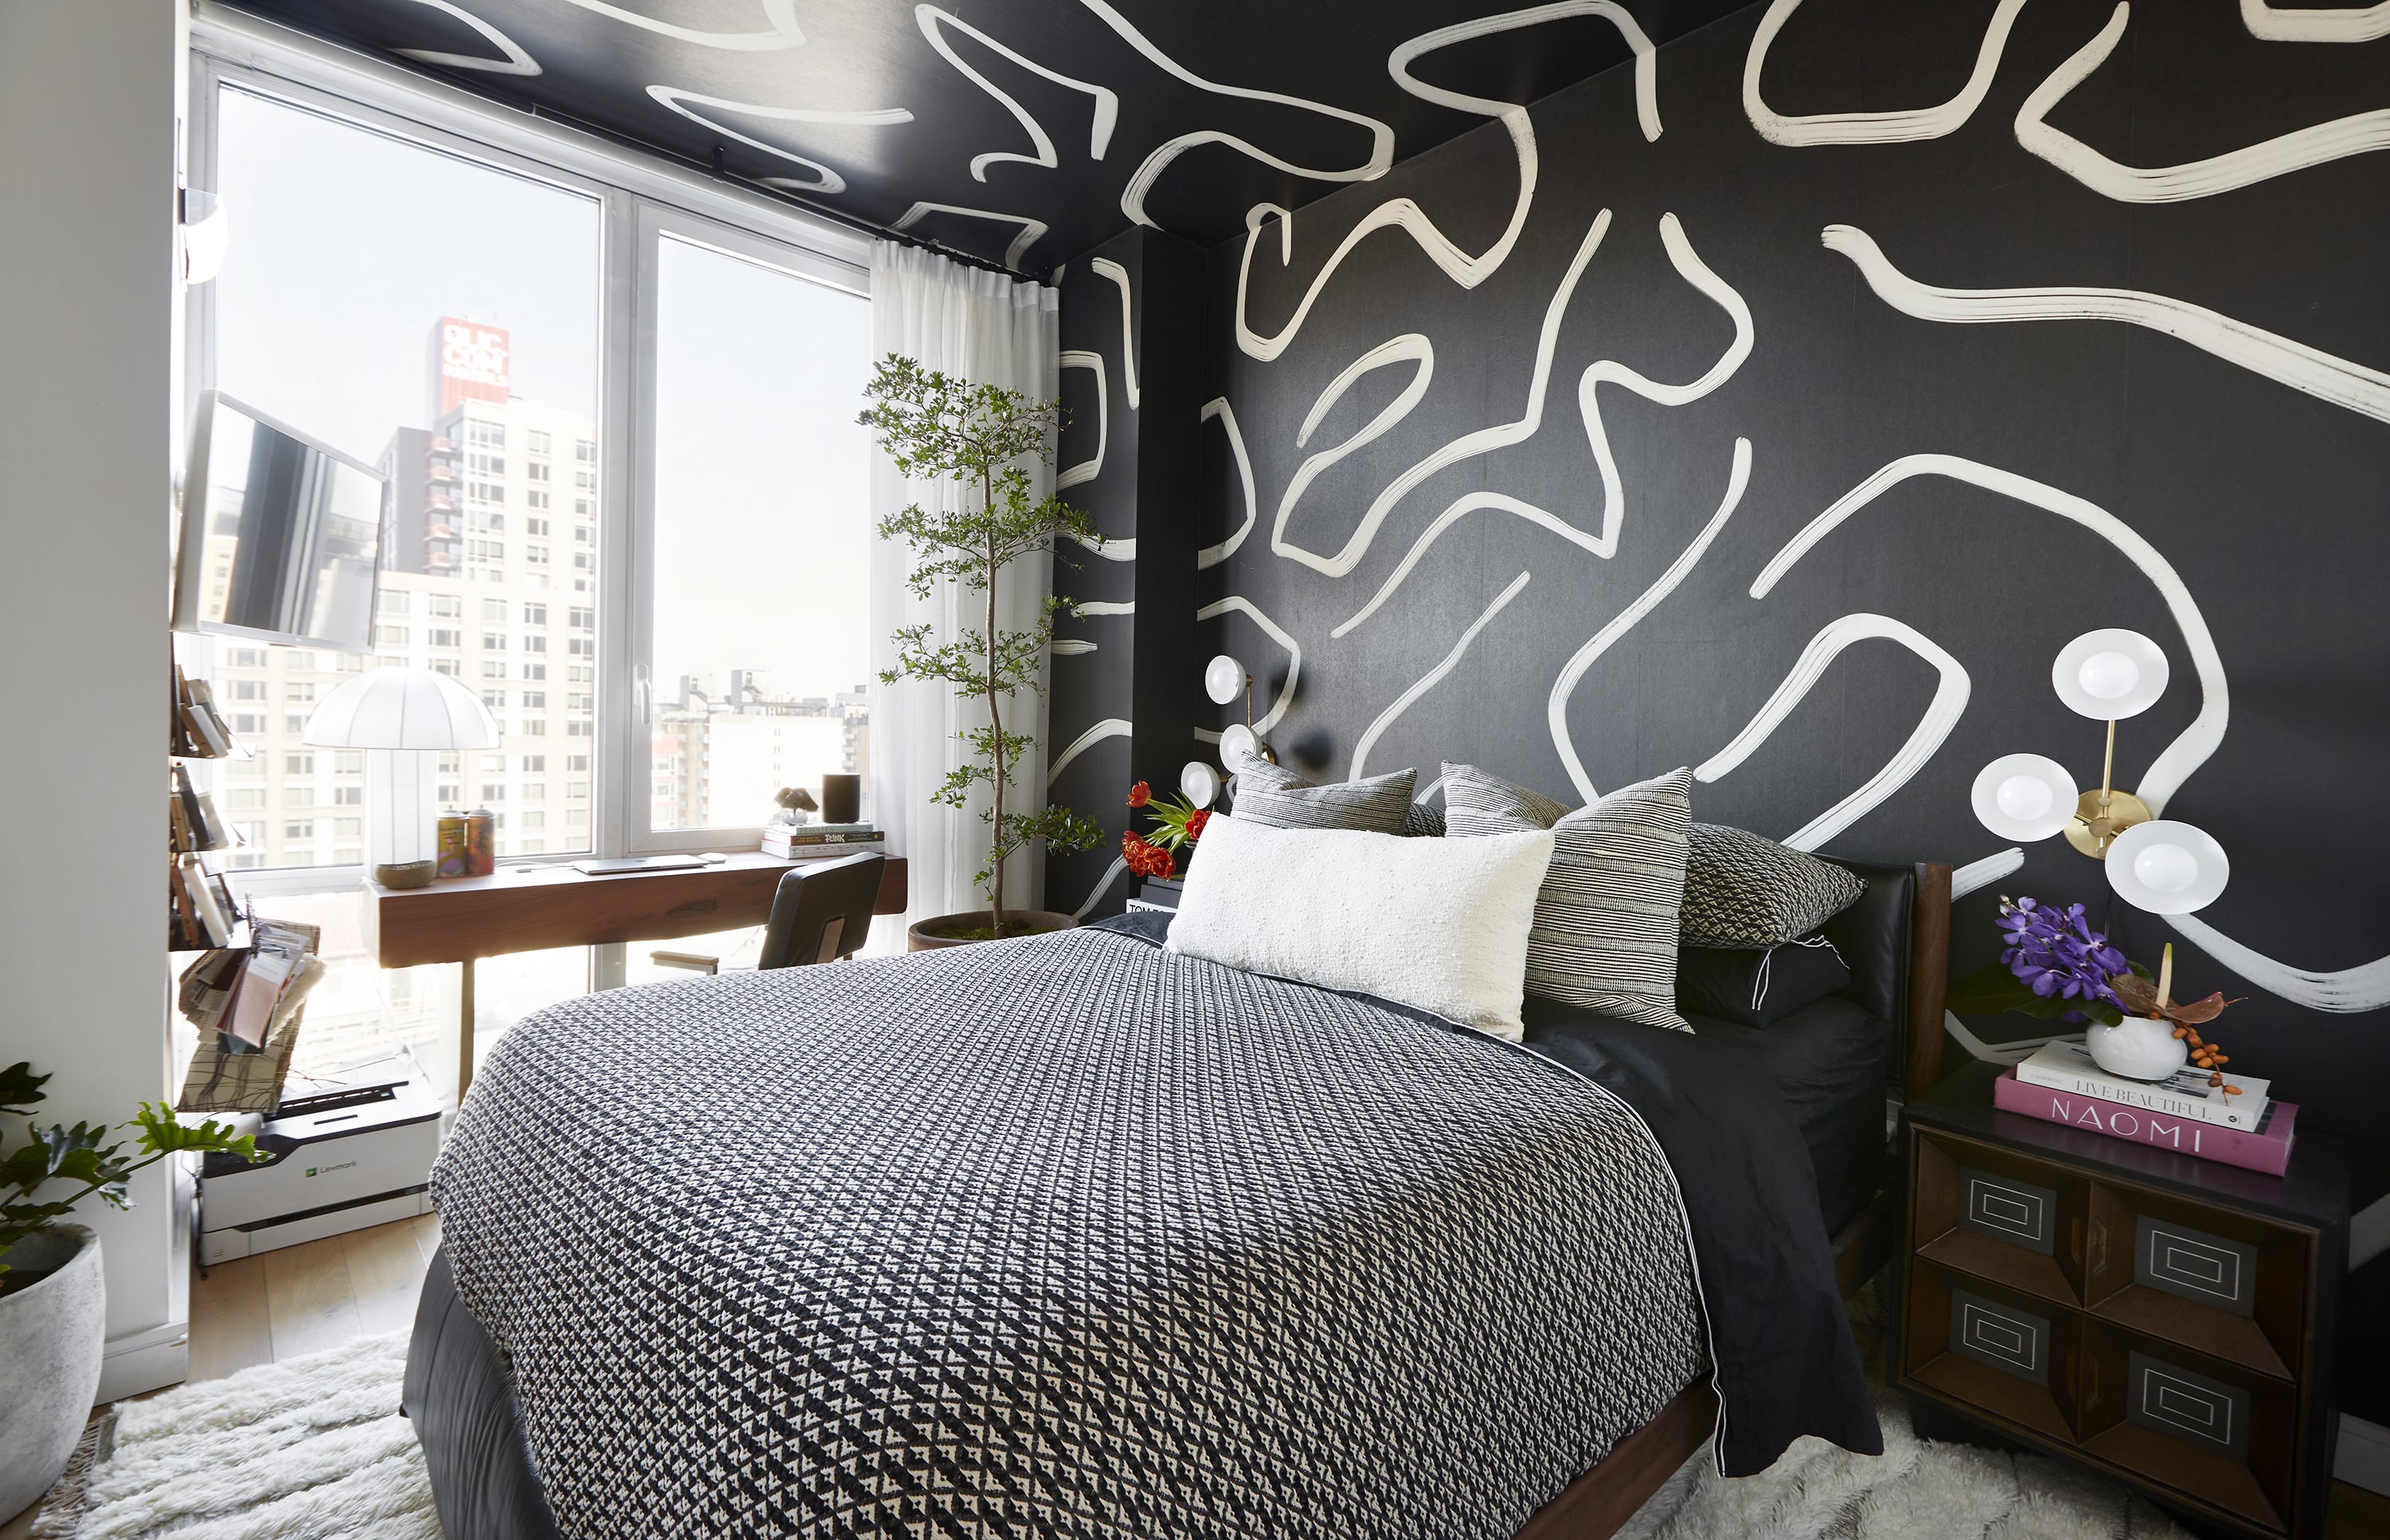 fake ivy  Bedroom decor, Wall tapestry bedroom, Dorm room styles